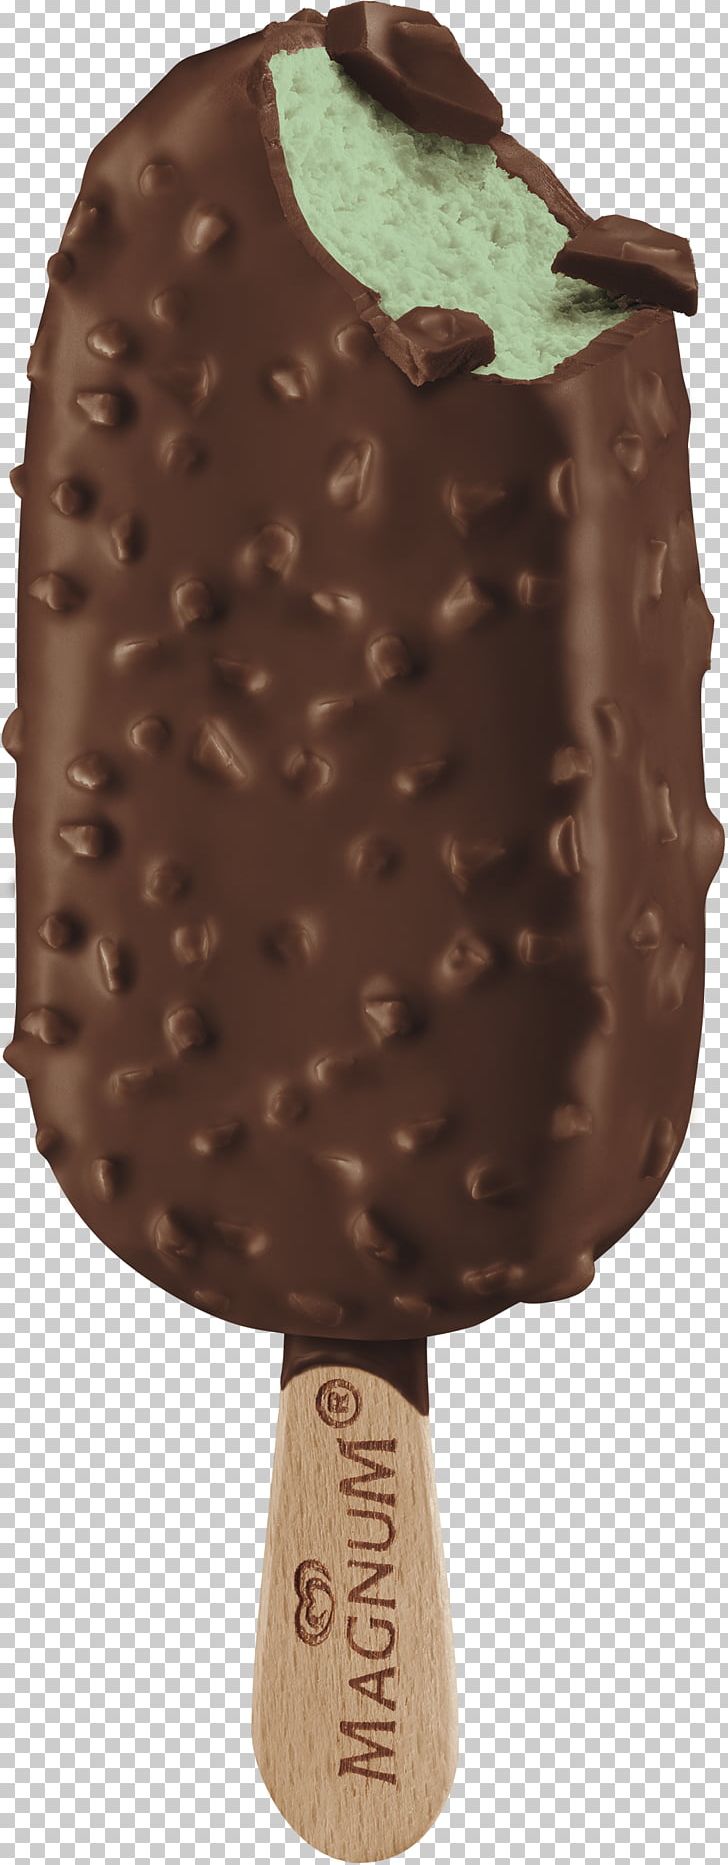 Chocolate Ice Cream Death By Chocolate Fudge Praline PNG, Clipart, Chocolate Ice Cream, Death By Chocolate, Fudge, Praline Free PNG Download